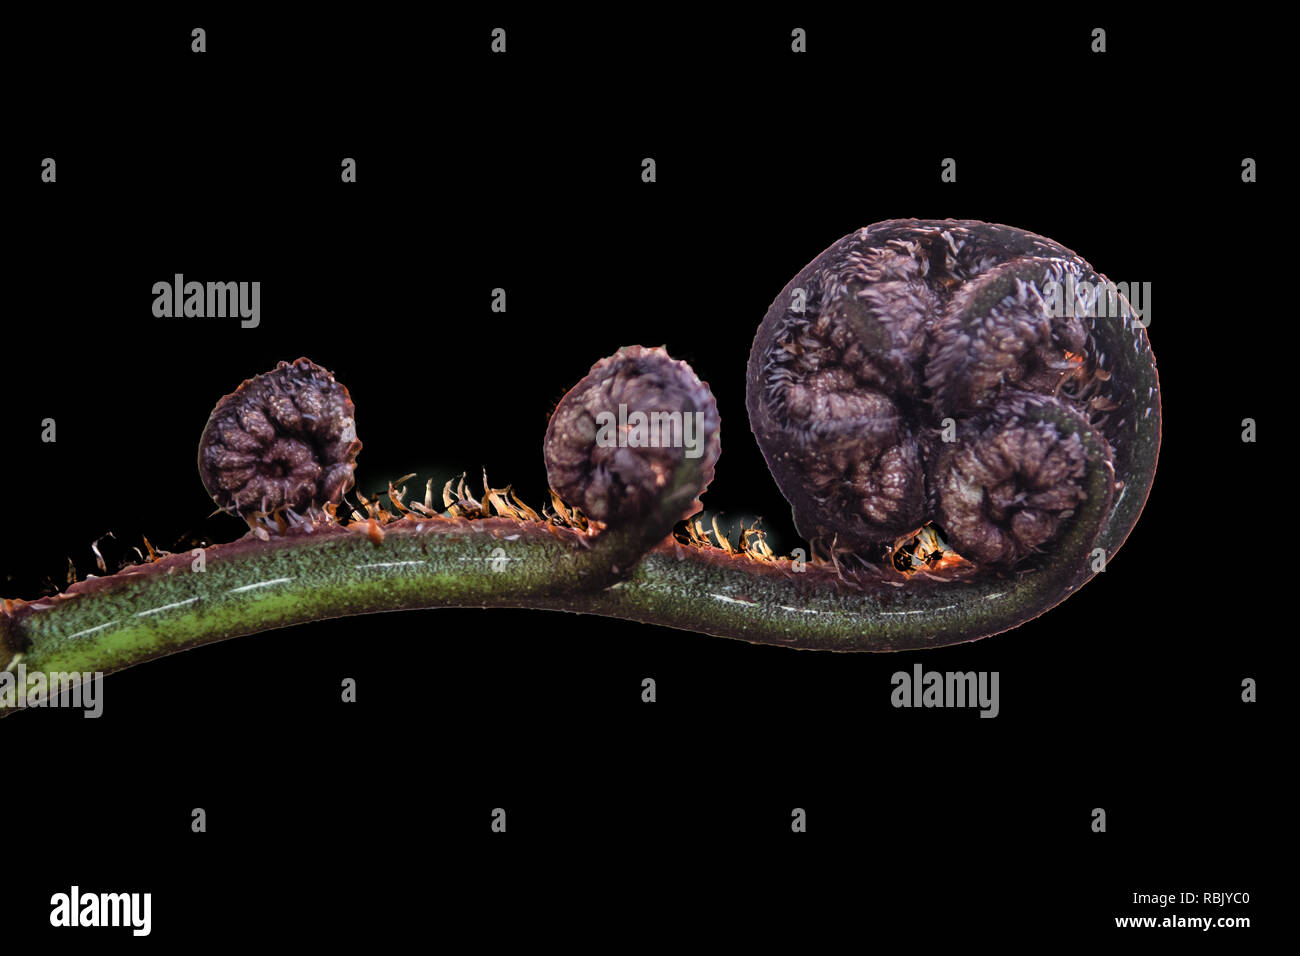 Unfurling frond tip of the Black tree fern (Cyathea medullaris) Stock Photo